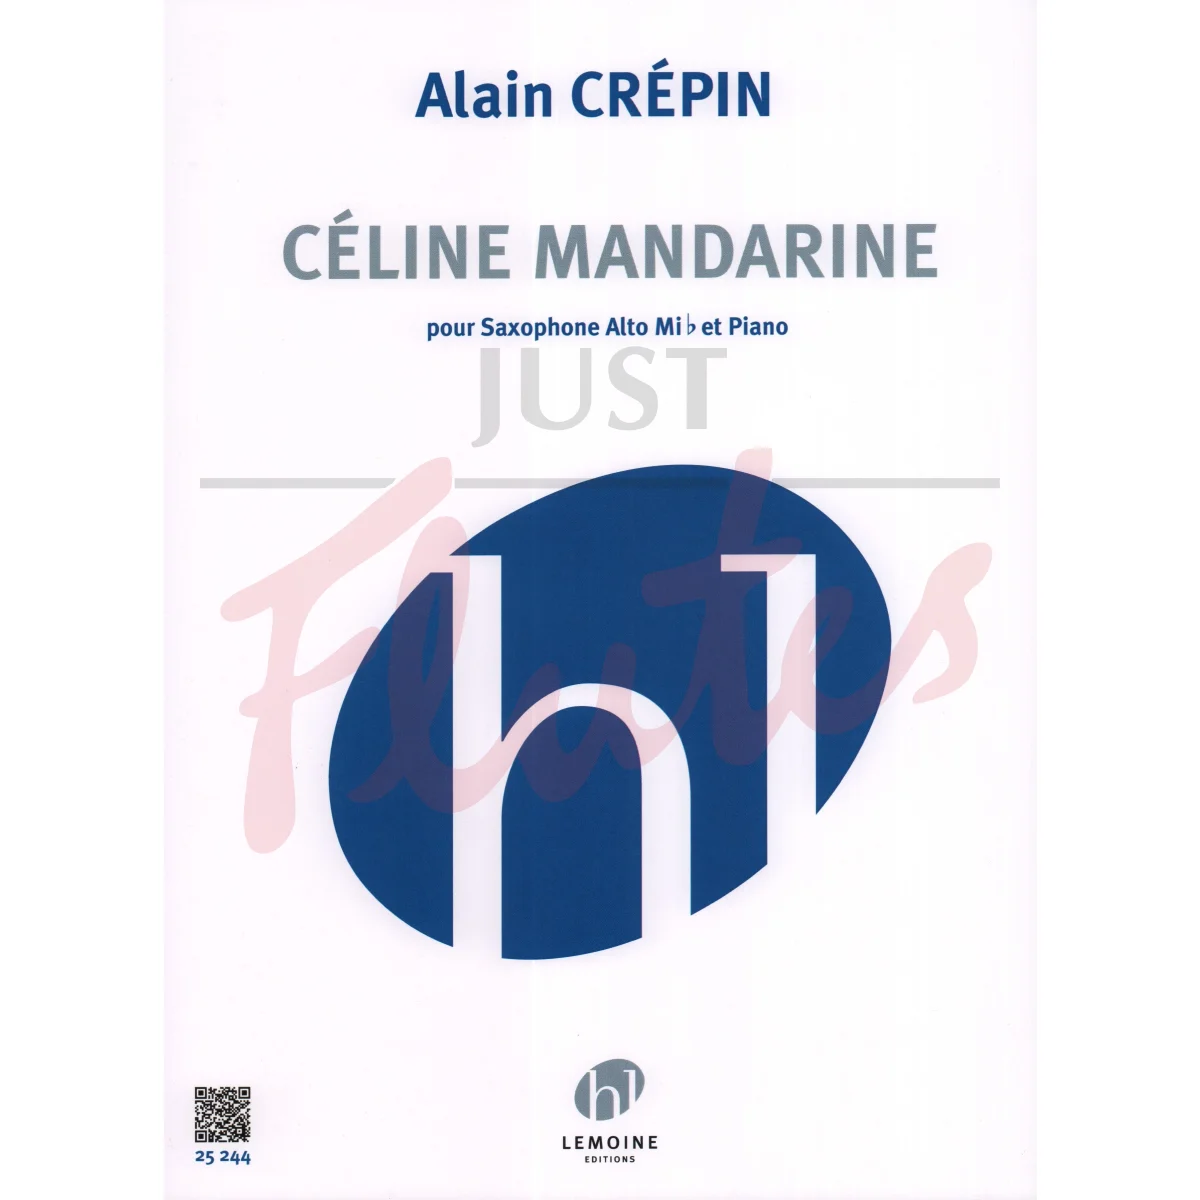 Celine Mandarine for Alto Saxophone and Piano